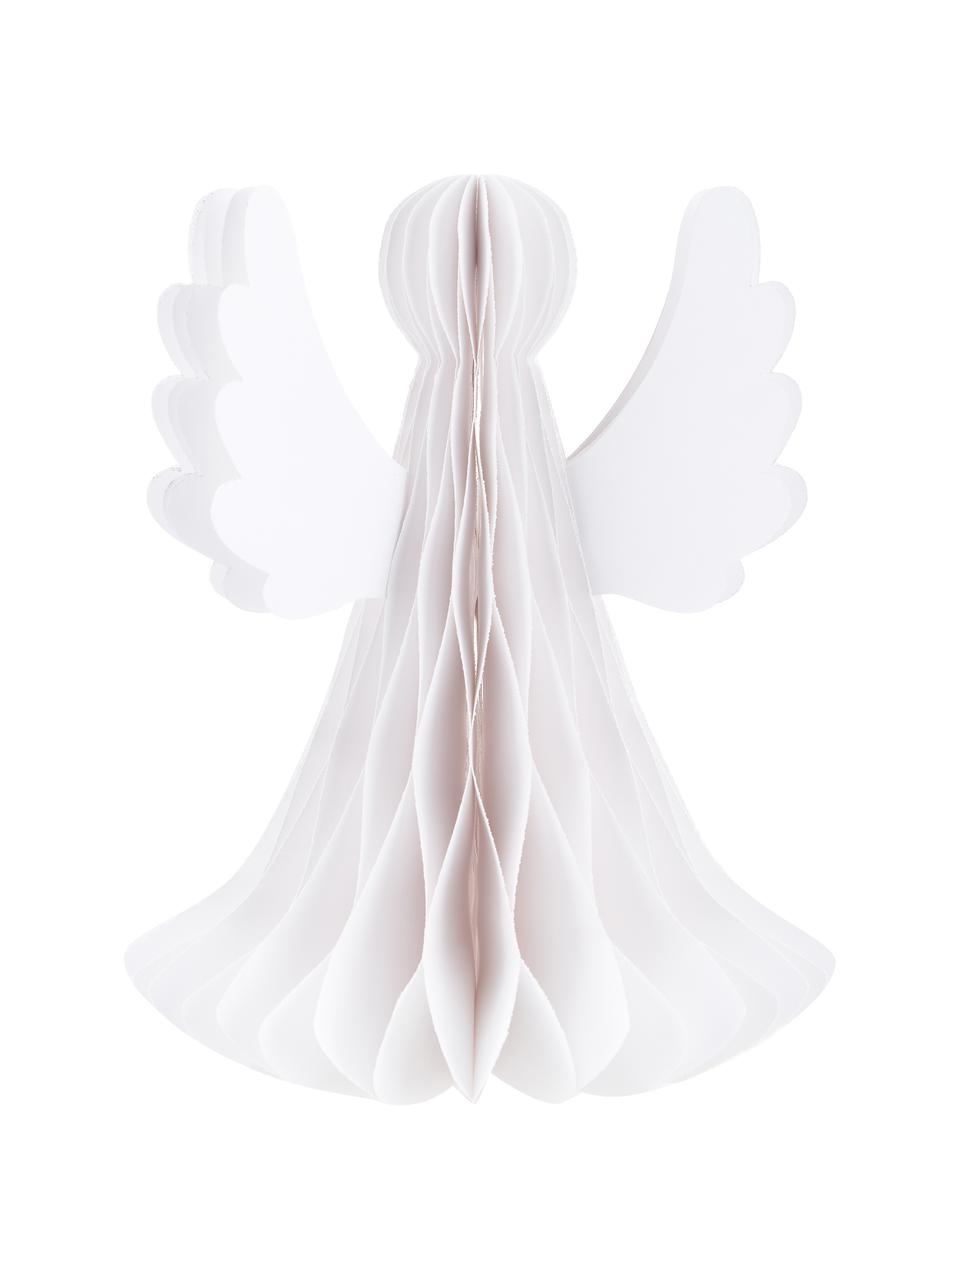 Oggetto decorativo bianca Angel, Carta, Bianco, Ø 21 x Alt. 27 cm